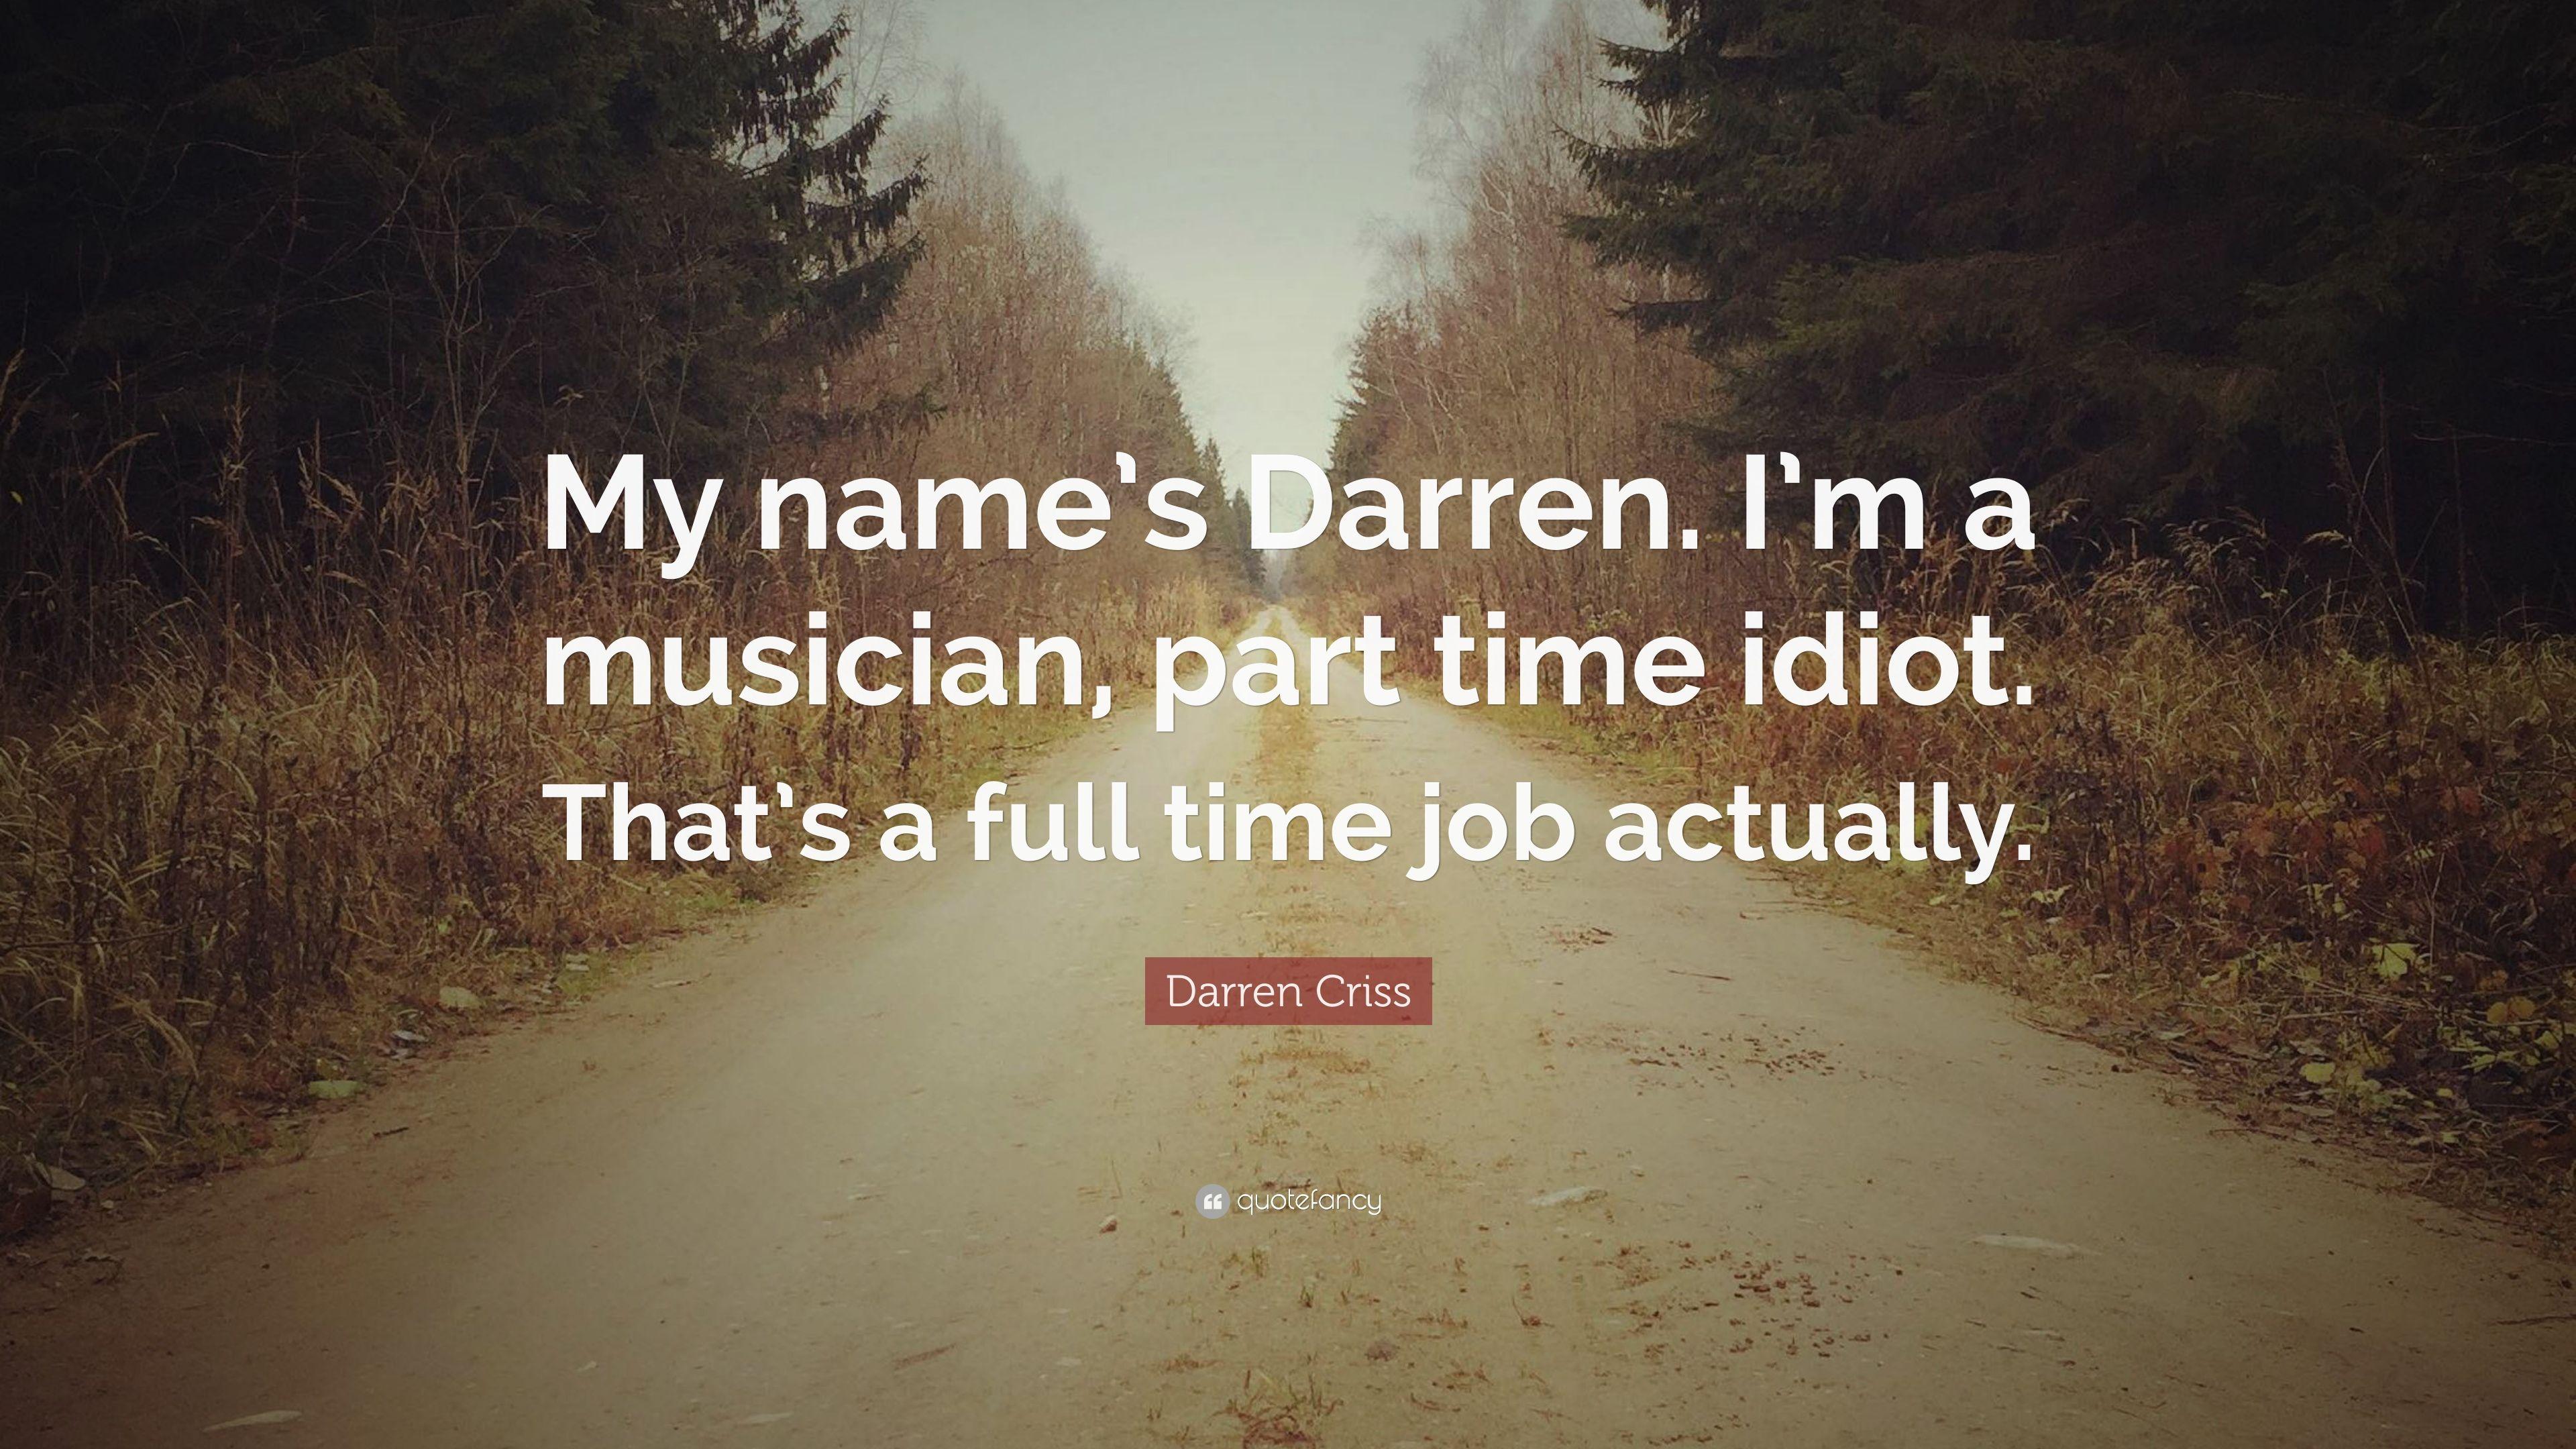 Darren Criss Quote: “My name's Darren. I'm a musician, part time